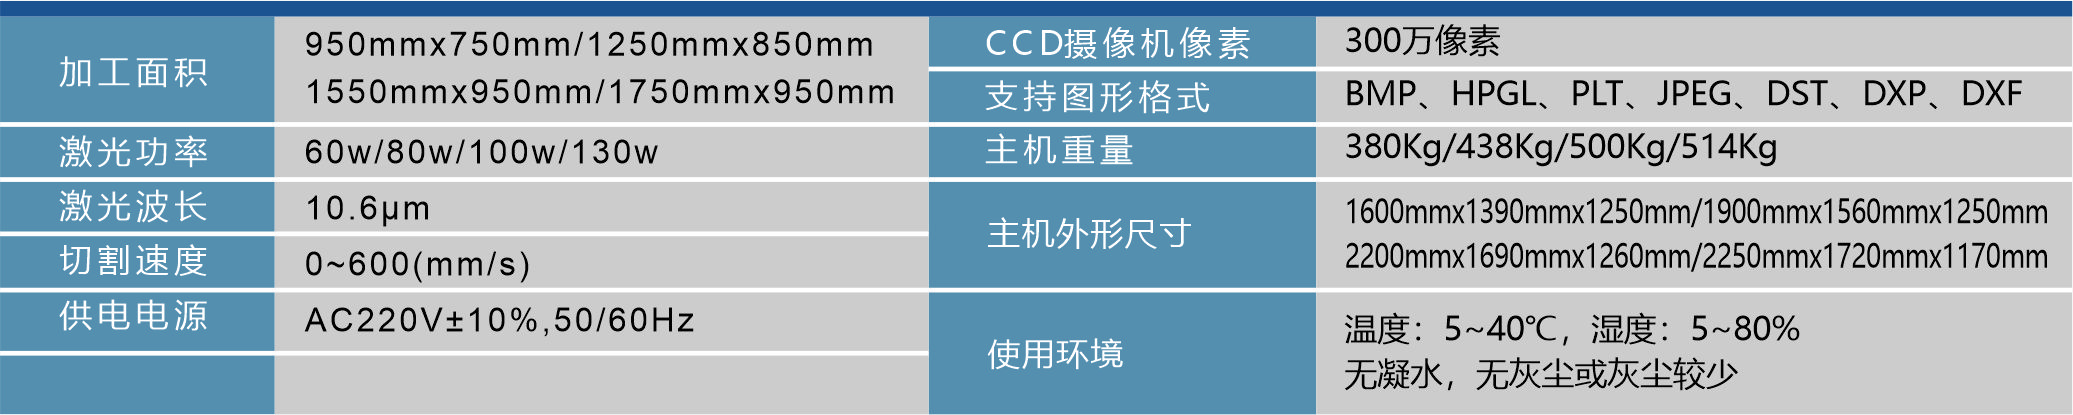 PS-1080-VT摄像定位双光头激光切割机